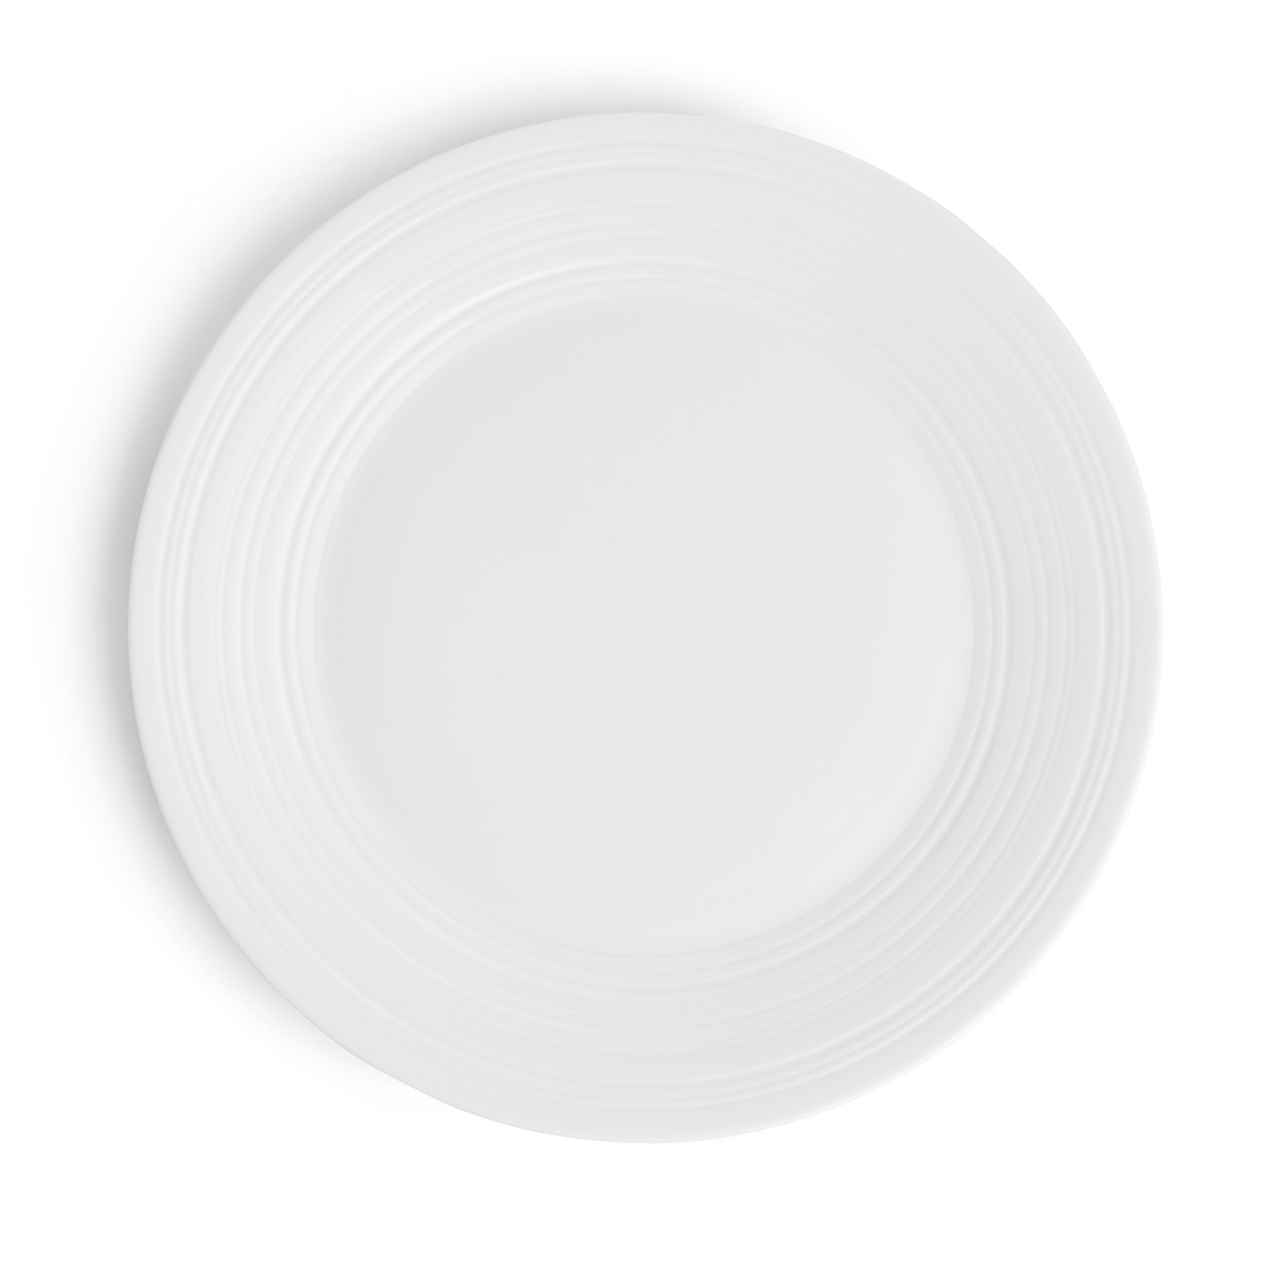 Jasper Conran Strata Dinner Plate 27cm